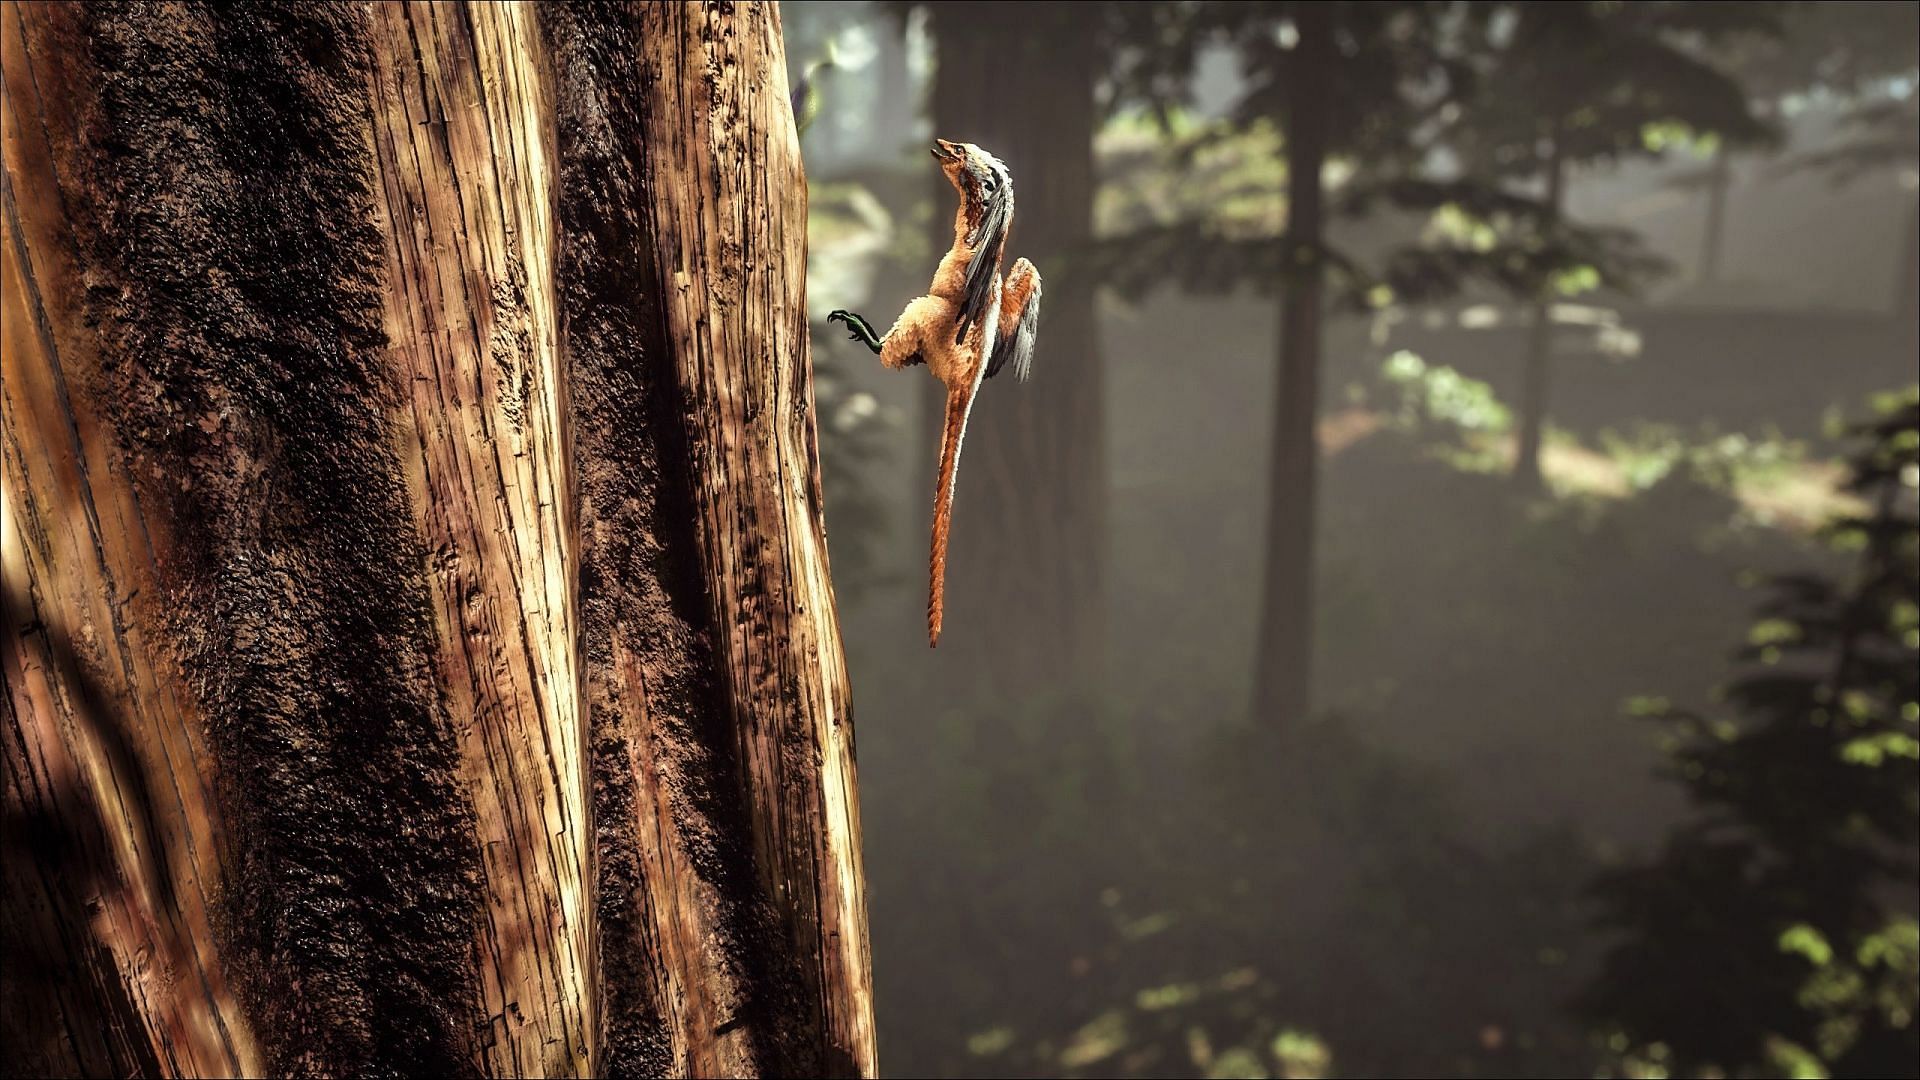 Archaeopteryx climbing a tree bark